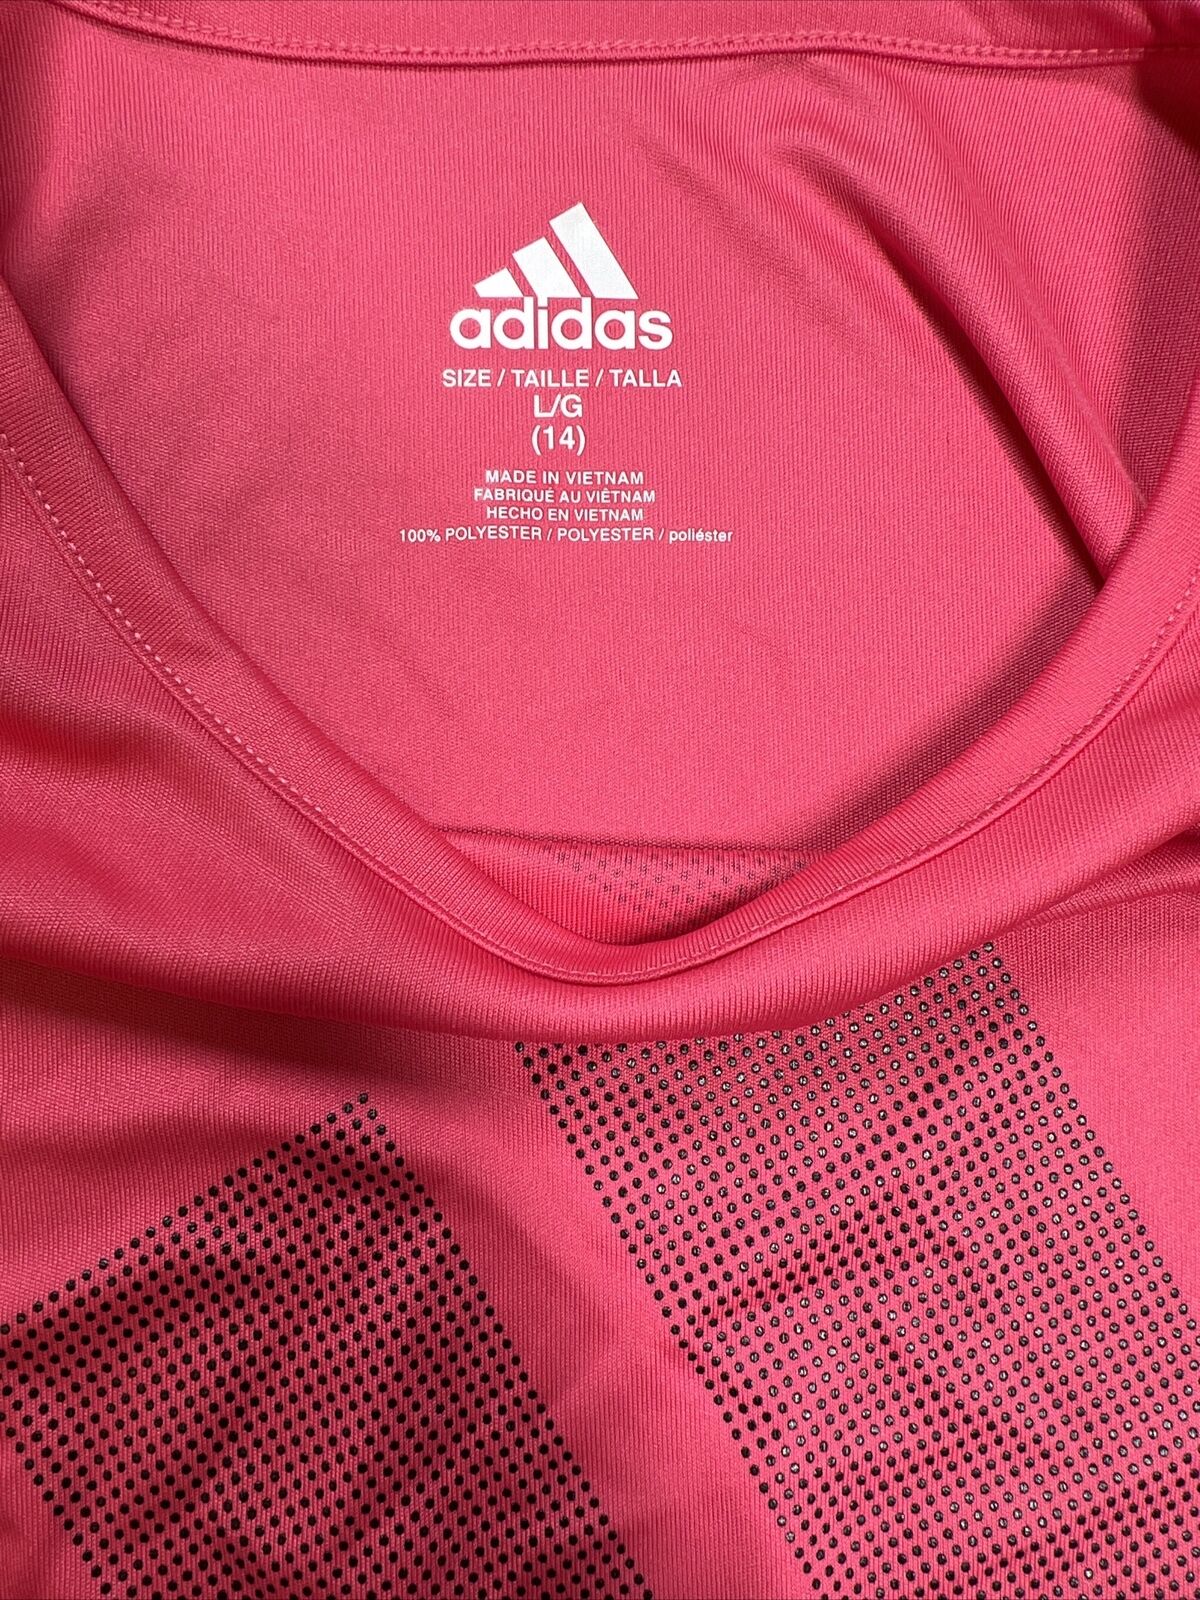 NEW adidas Girls Kids Short Sleeve Athletic Shirt - L 14